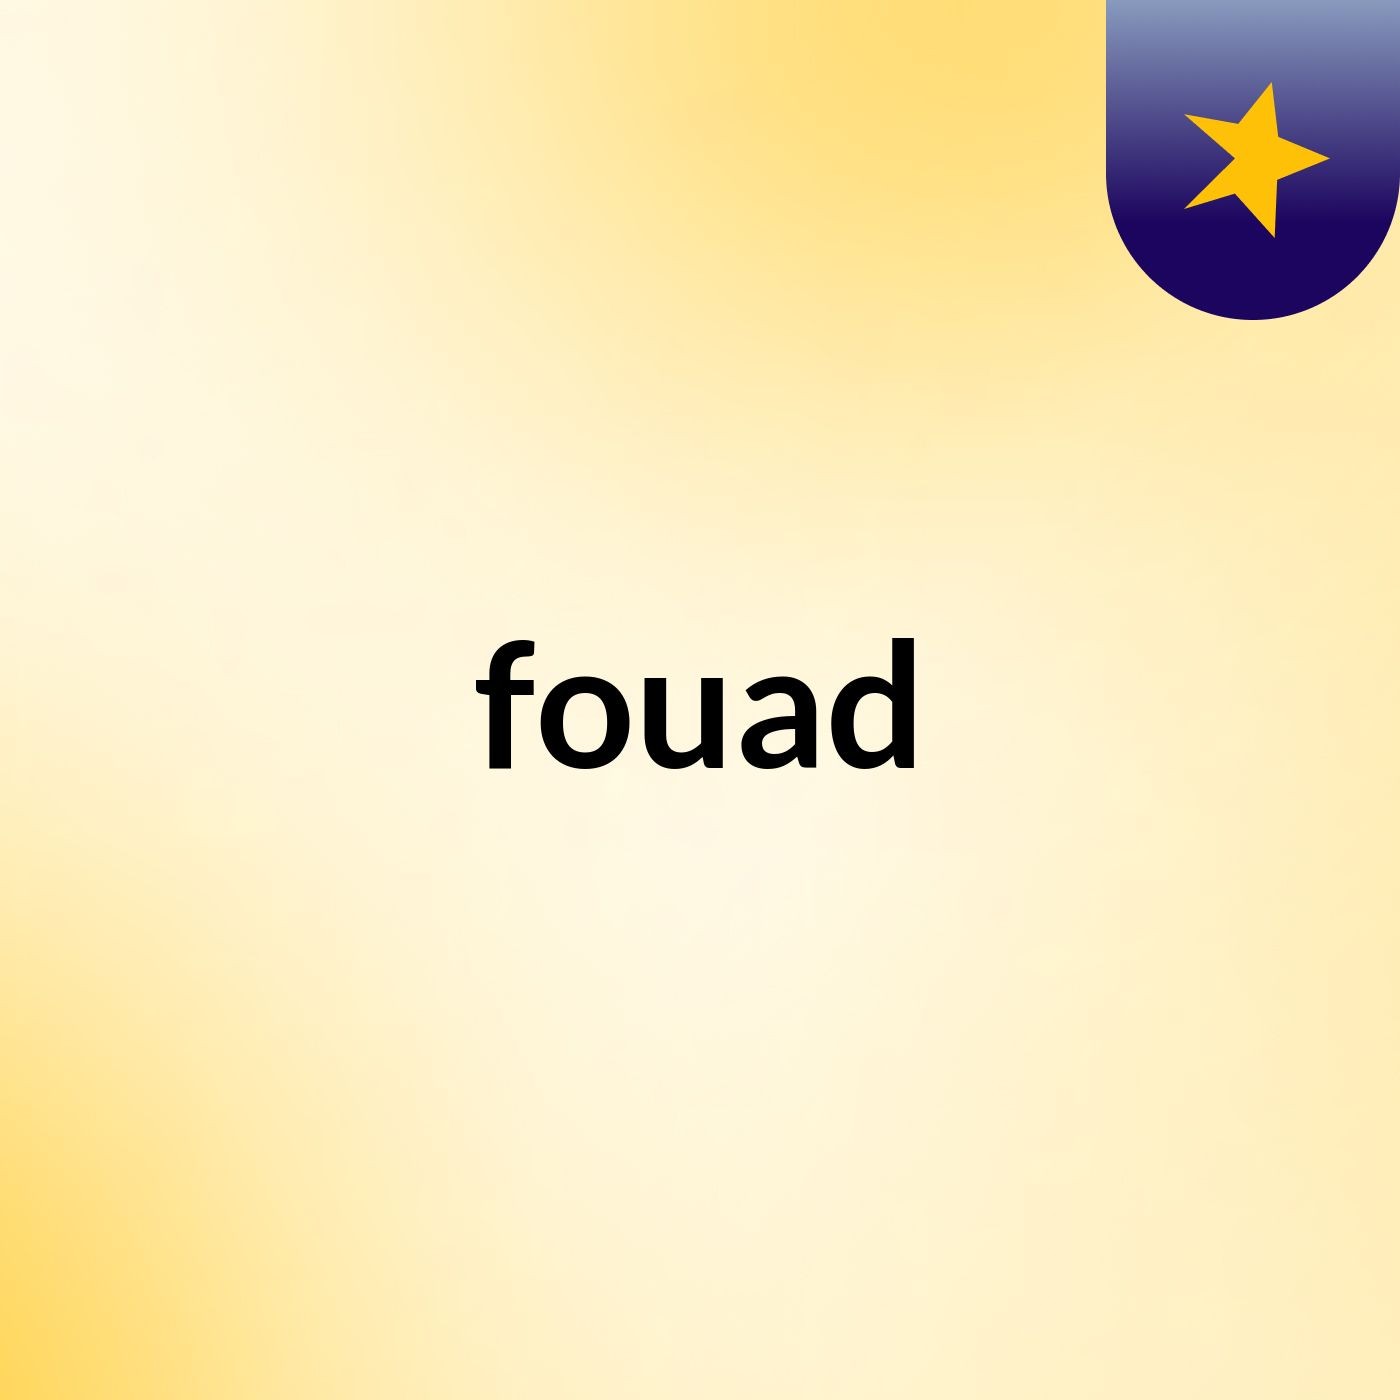 fouad